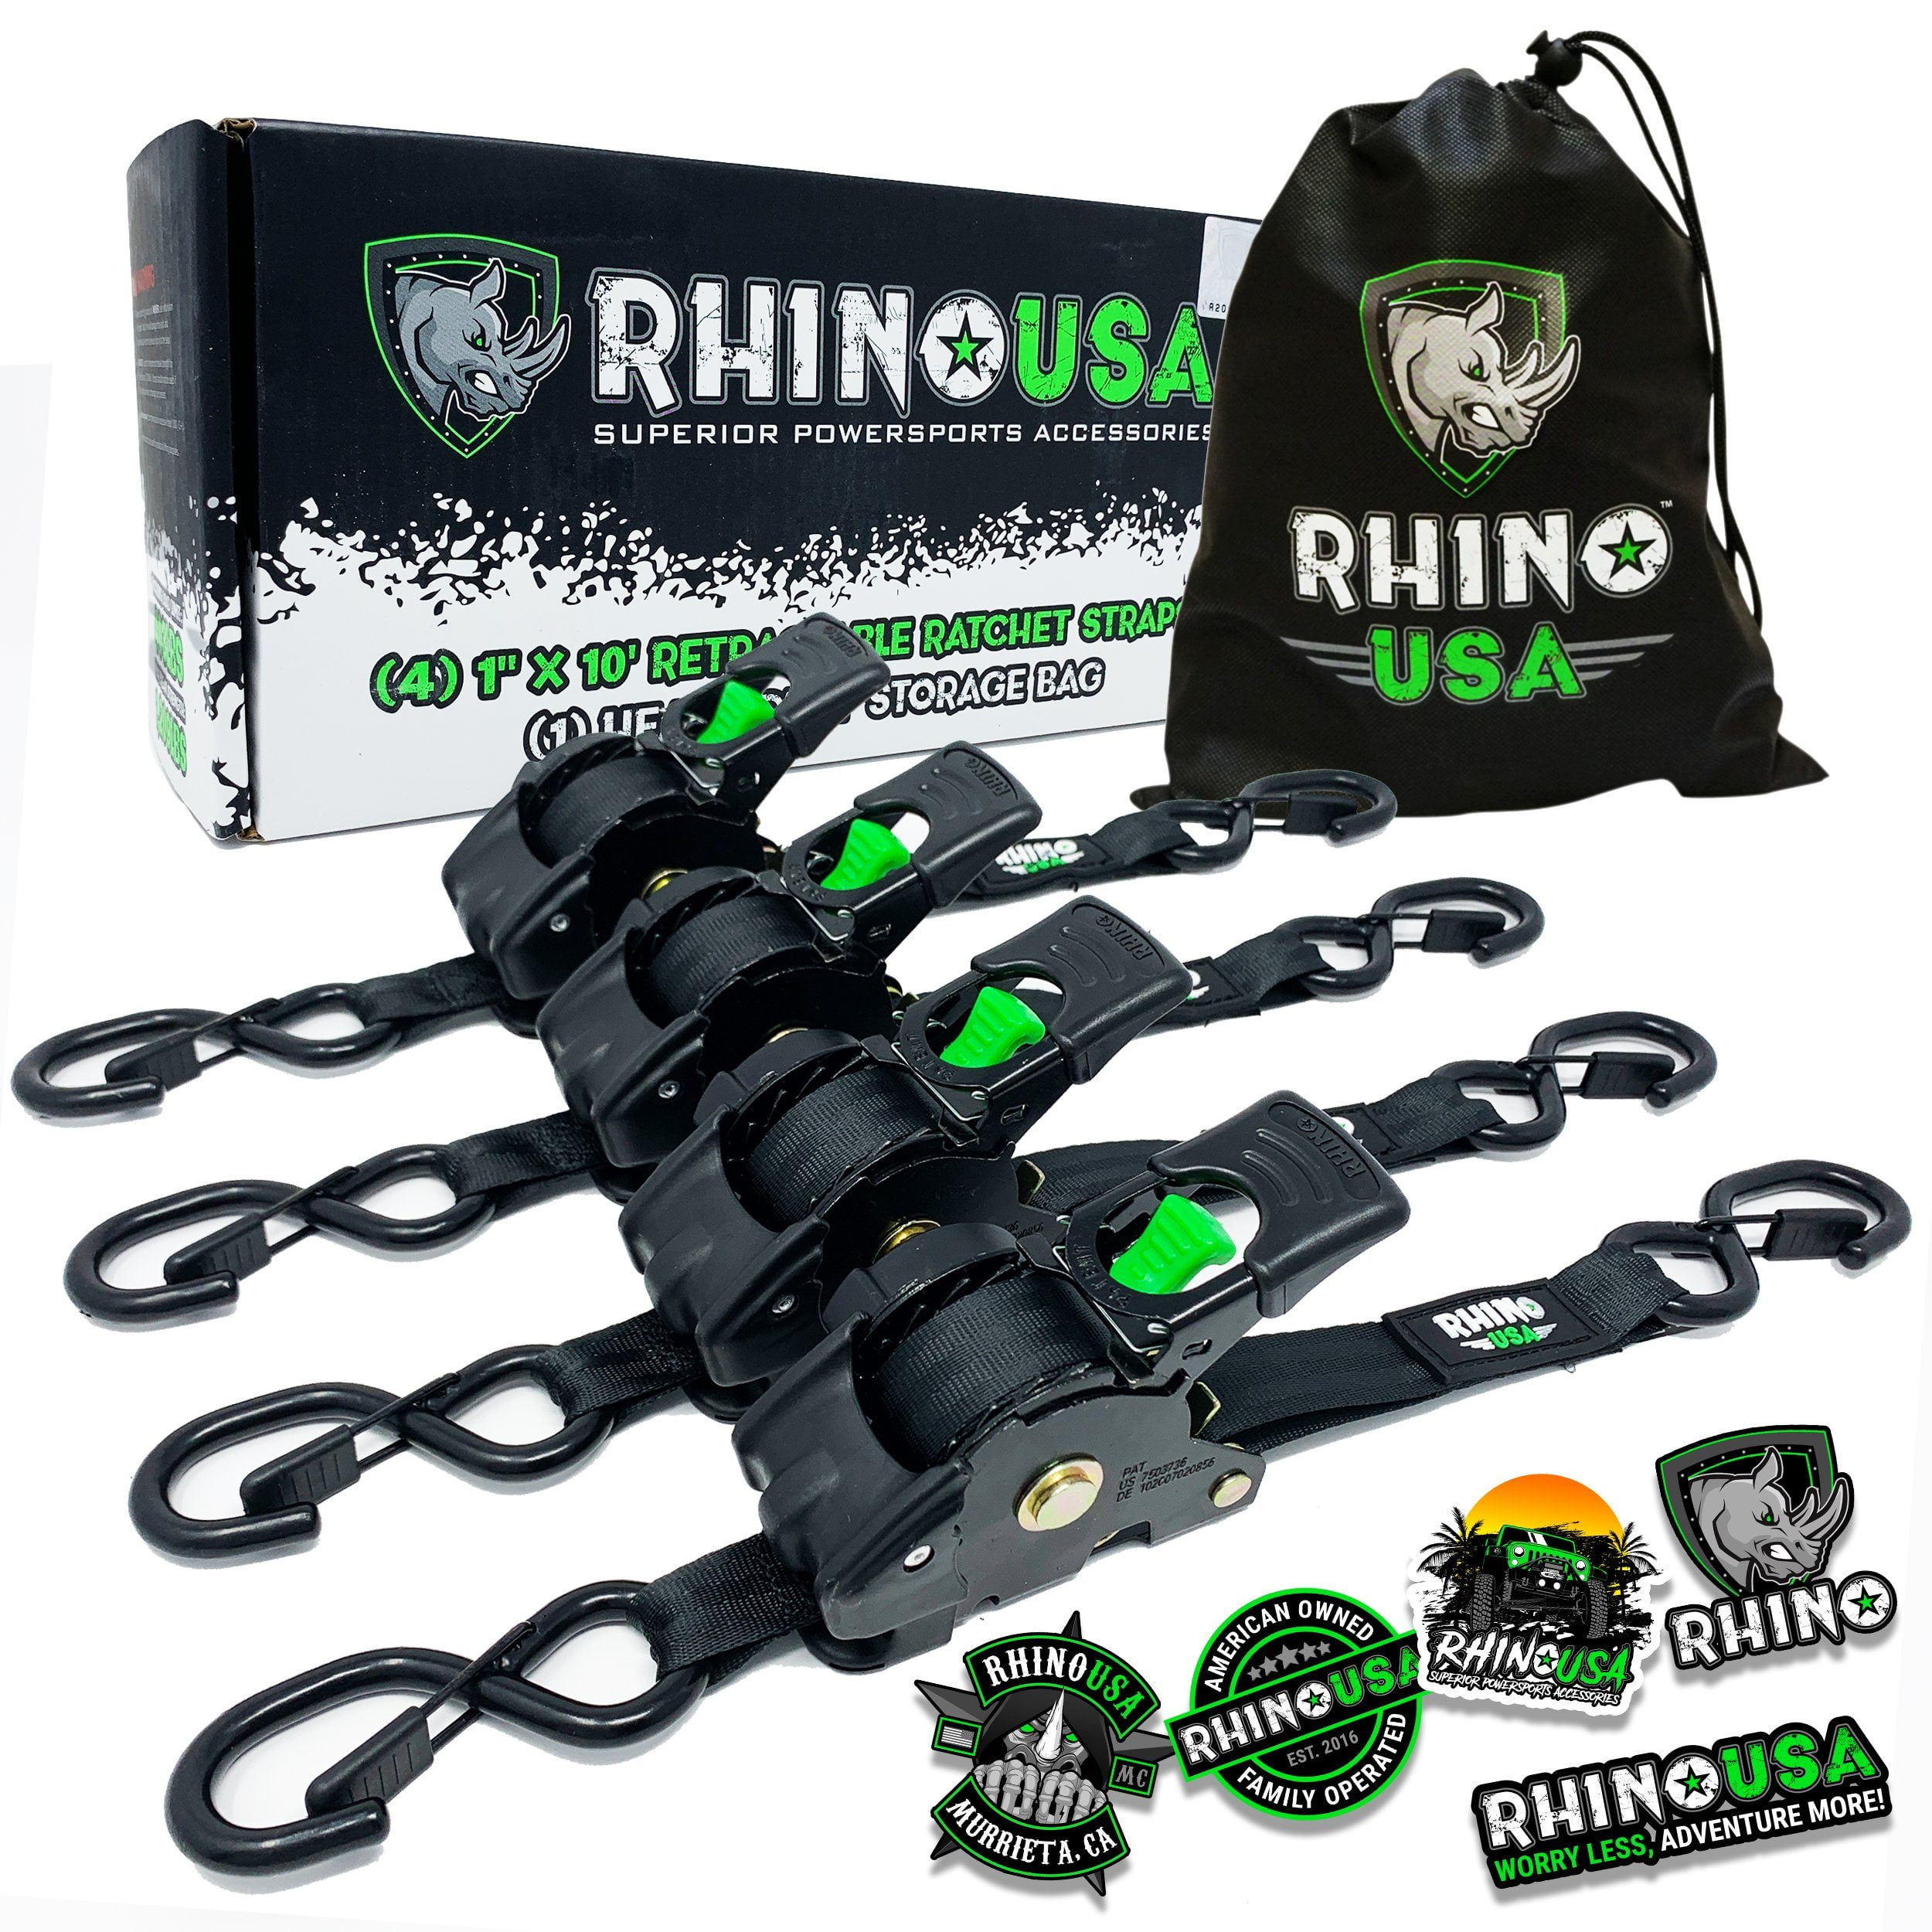 Rhino USA, Inc. 1 x 10' Retractable Ratchet Straps - 4-Pack